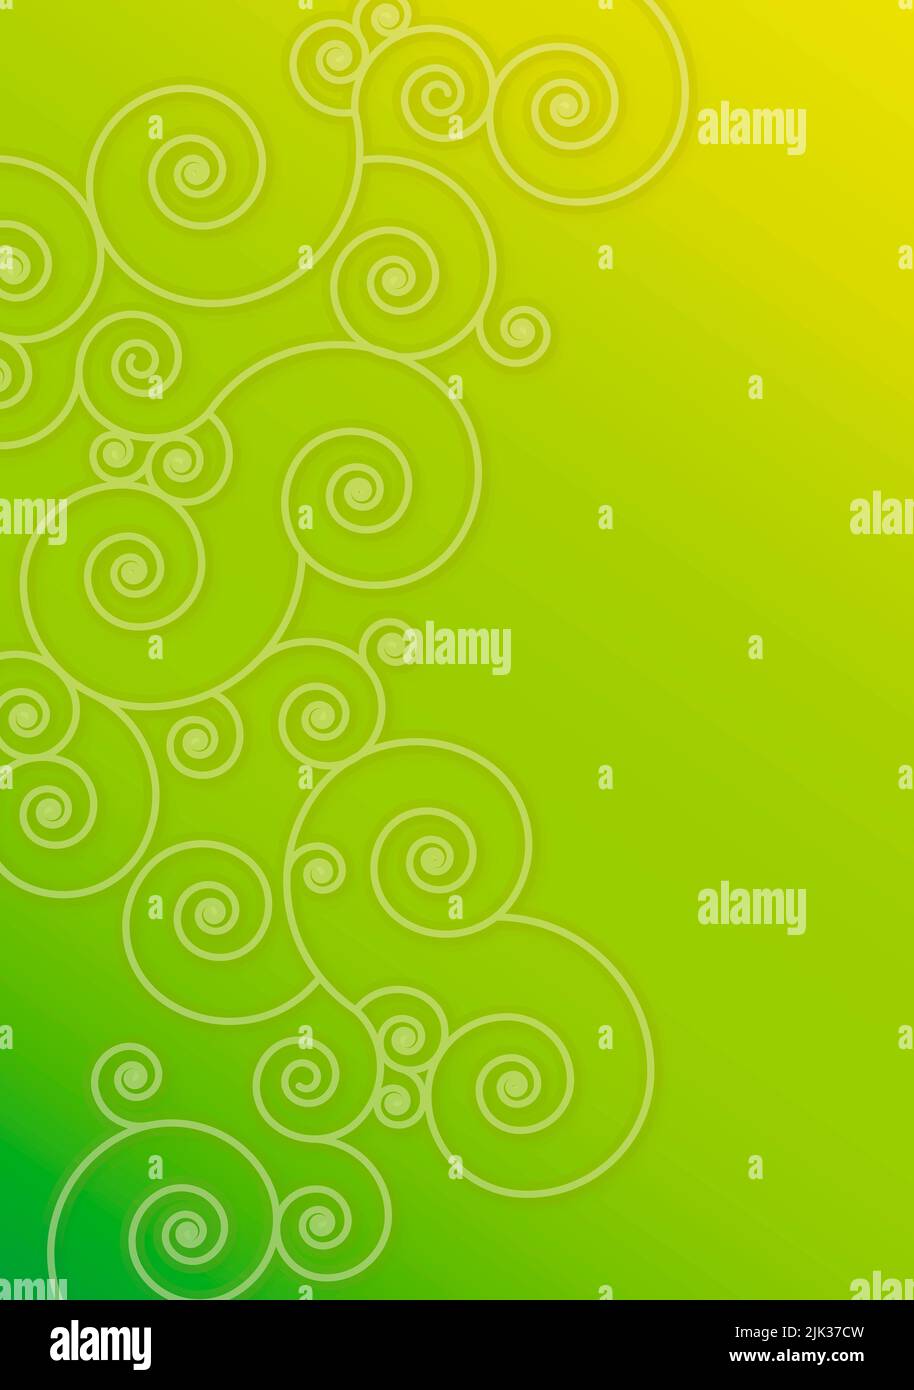 Abstract modern green background paisley Design - stock illustration Stock Photo